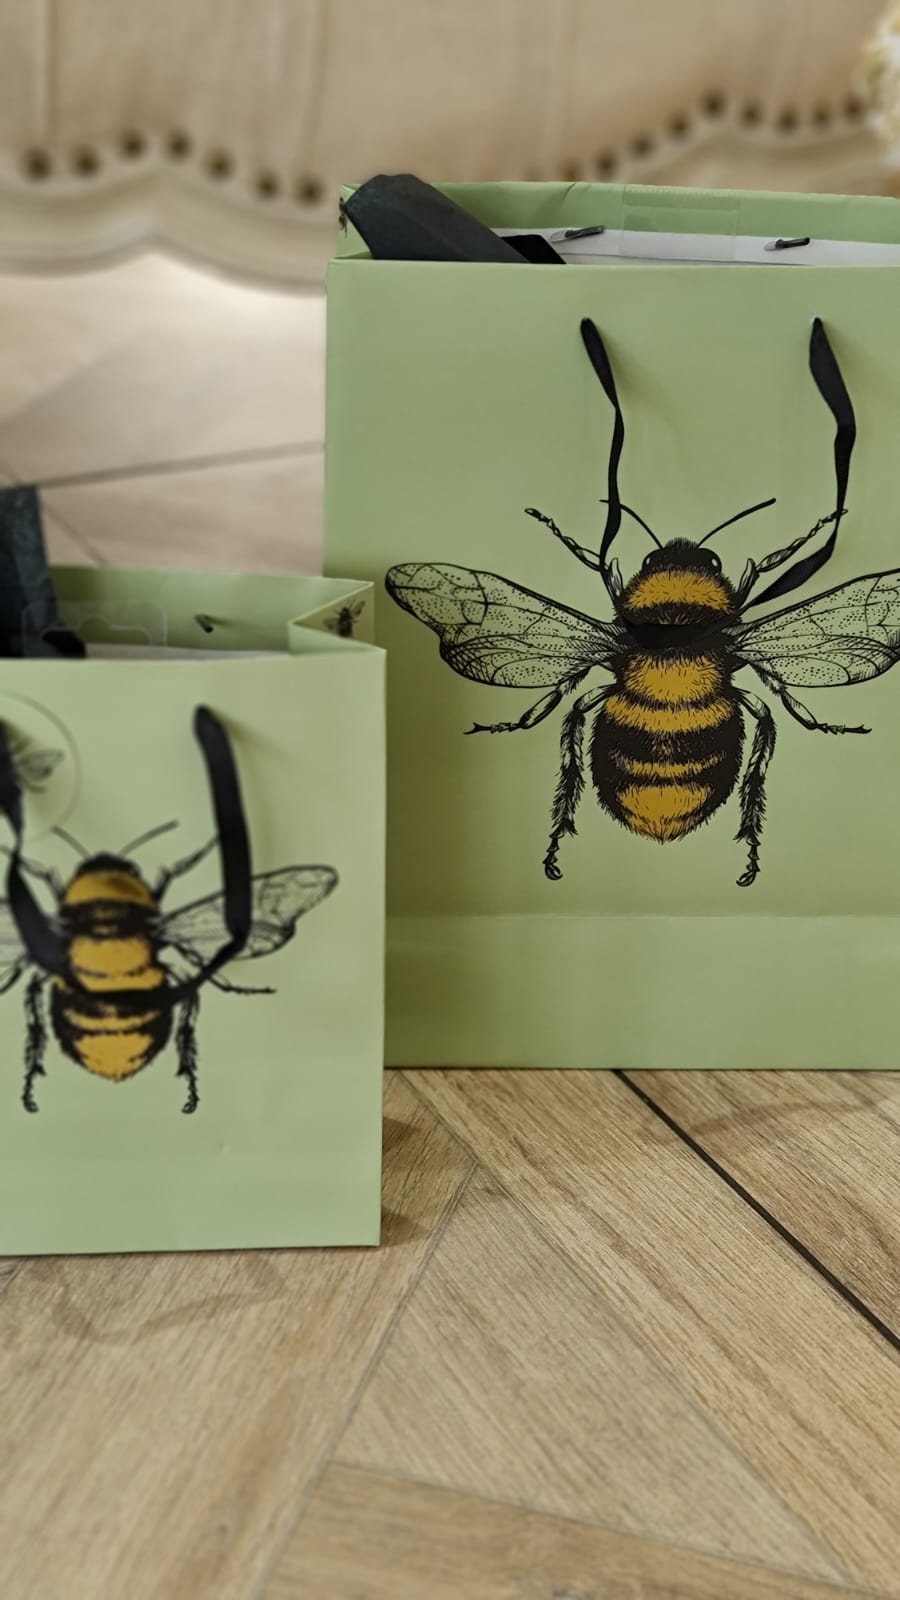 Golden Bee Green Gift Bag